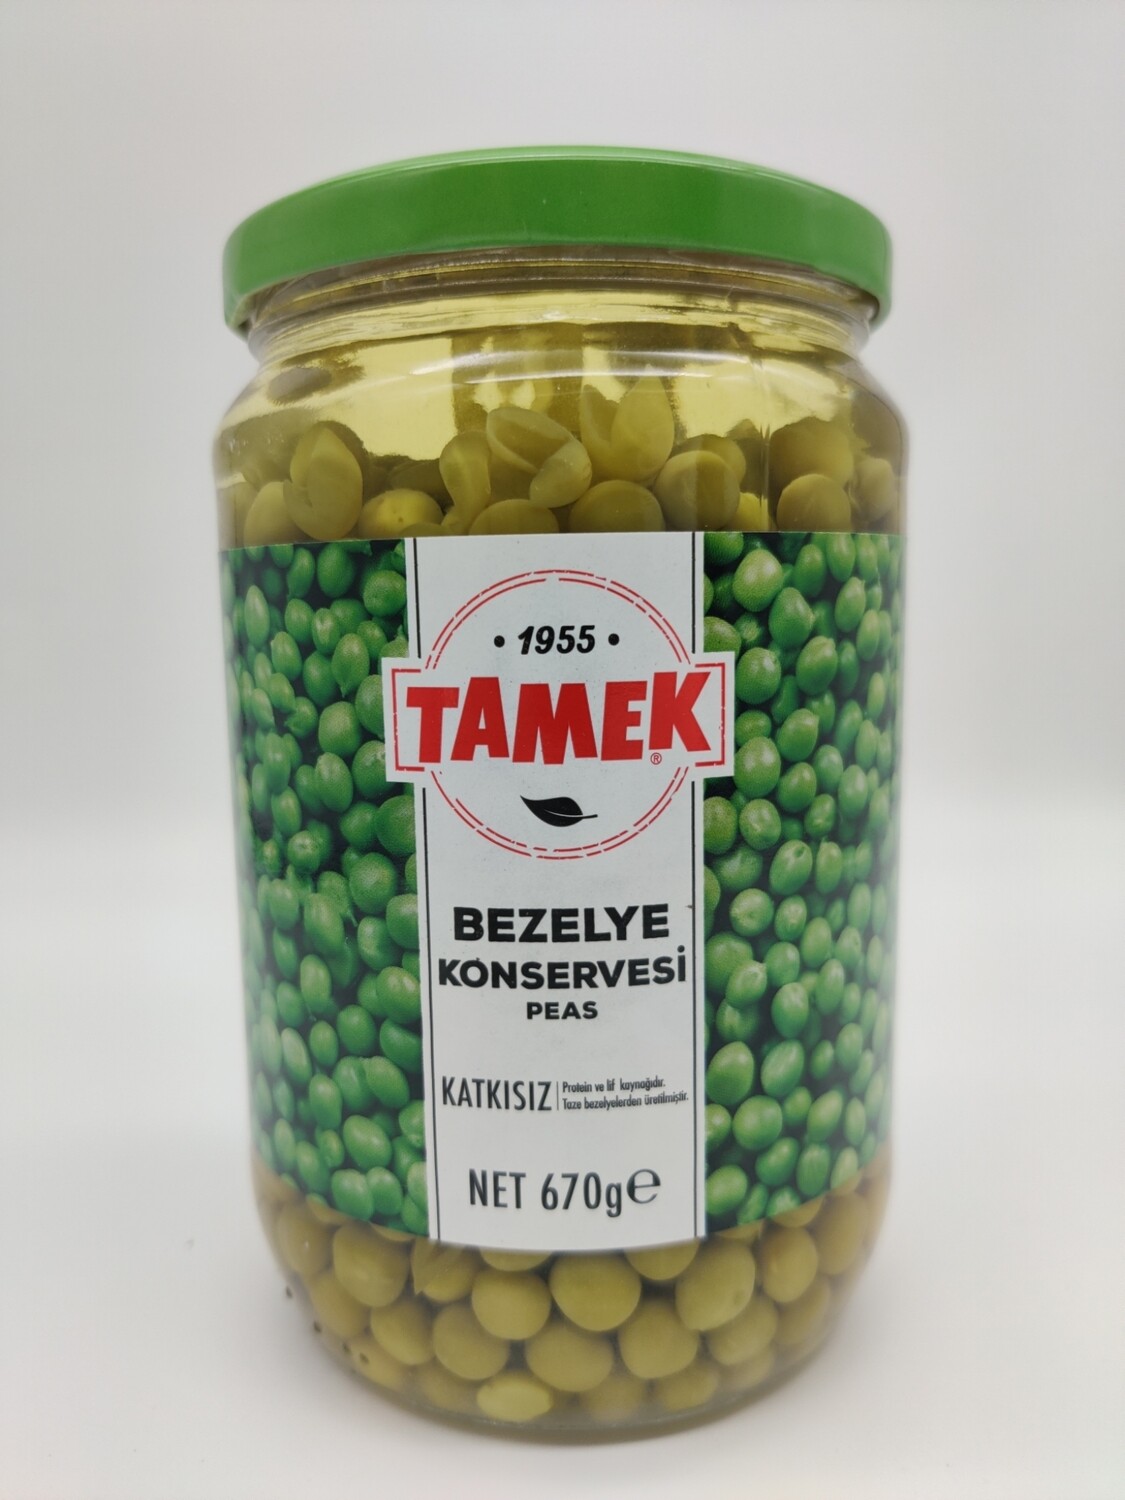 TAMEK Green Peas (Taze Bezelye) (Glass) 670g